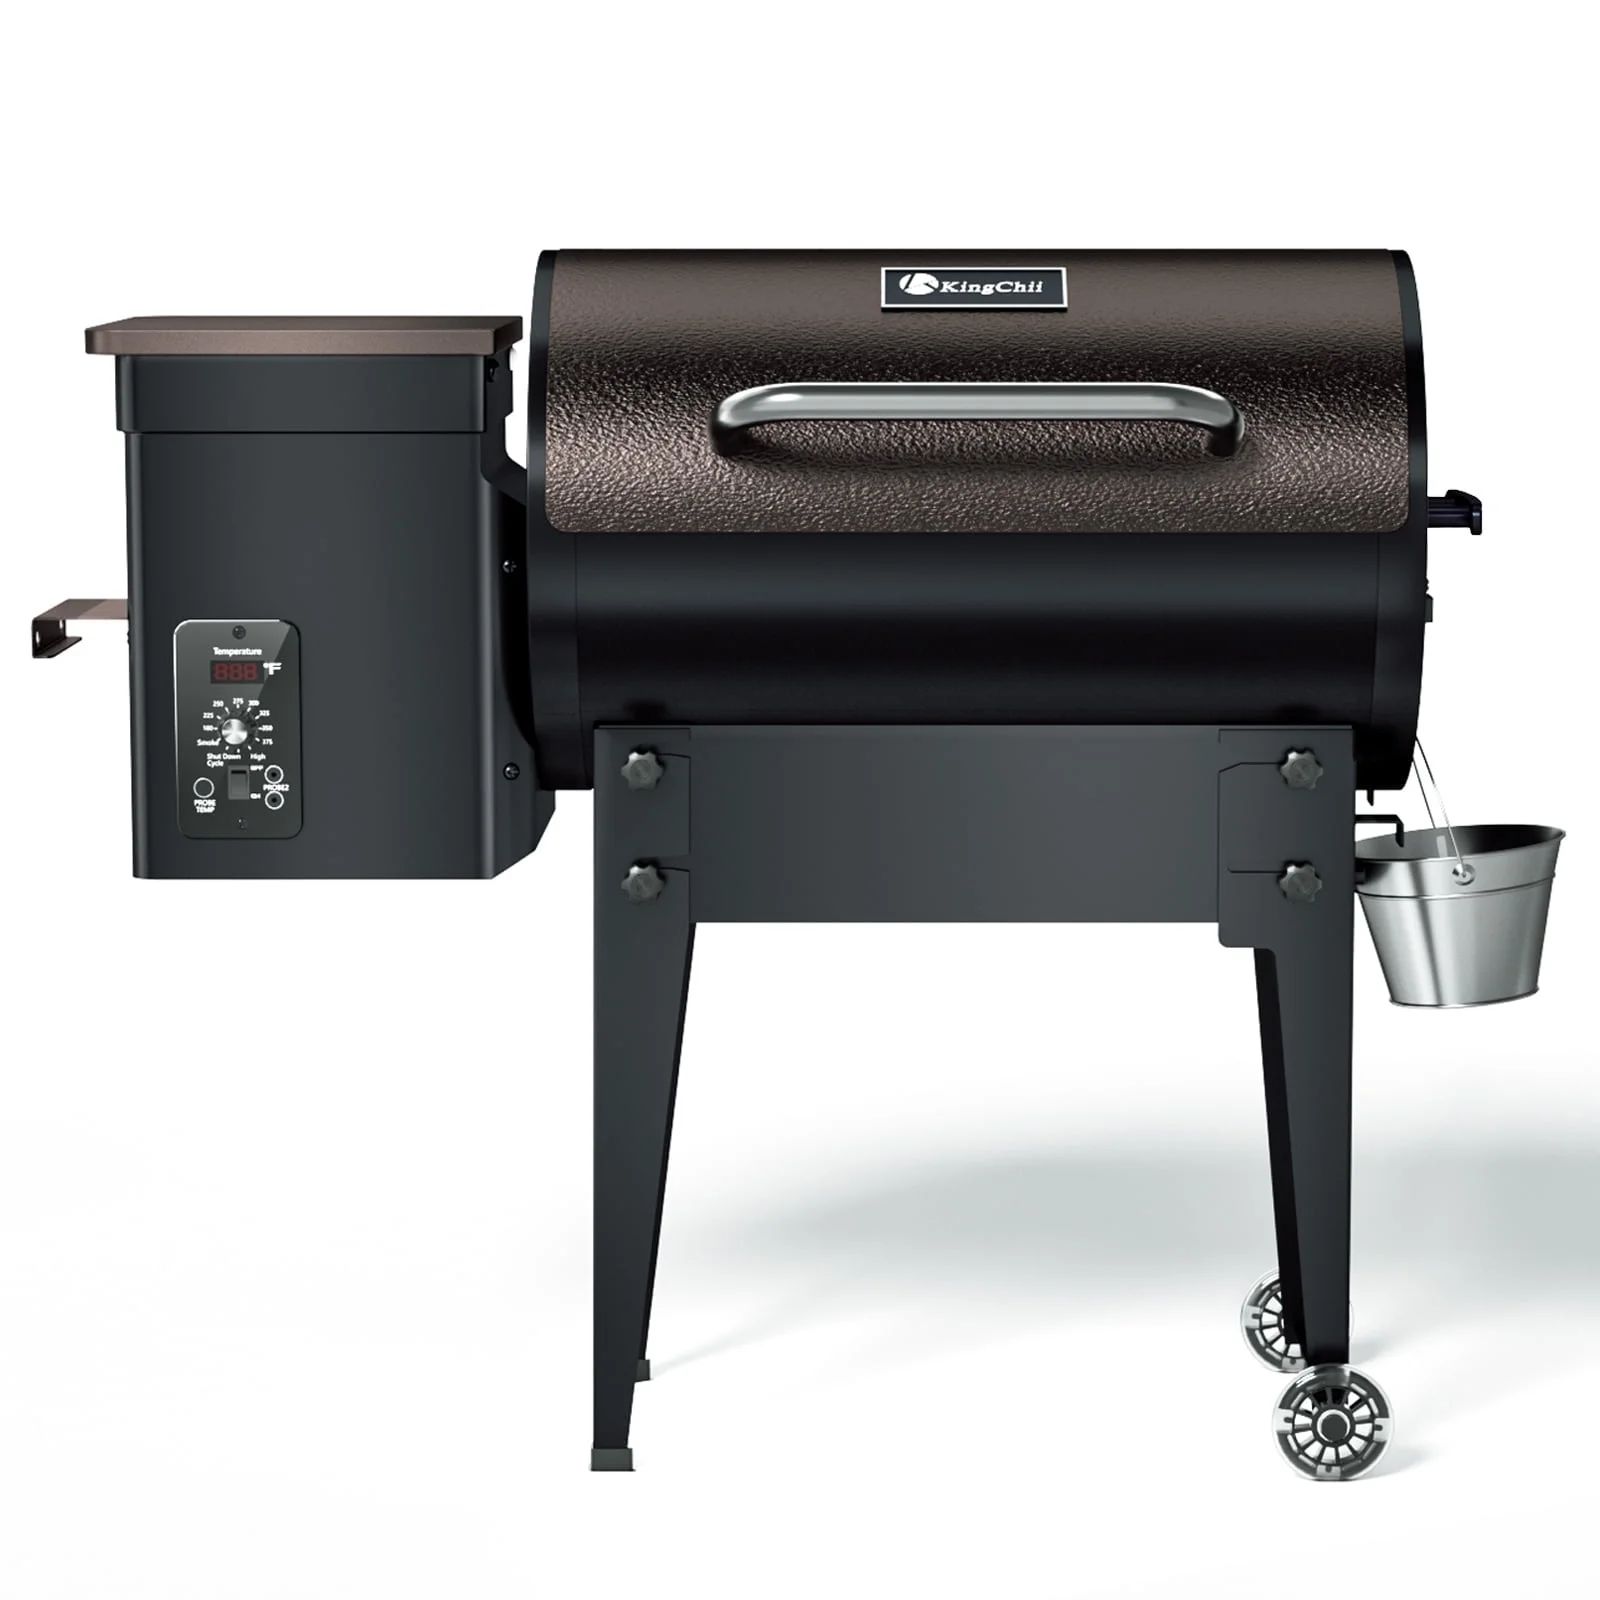 KingChii 456 sq. in Wood Pellet Smoker & Grill BBQ with Auto Temperature Control, Folding Legs fo... | Walmart (US)